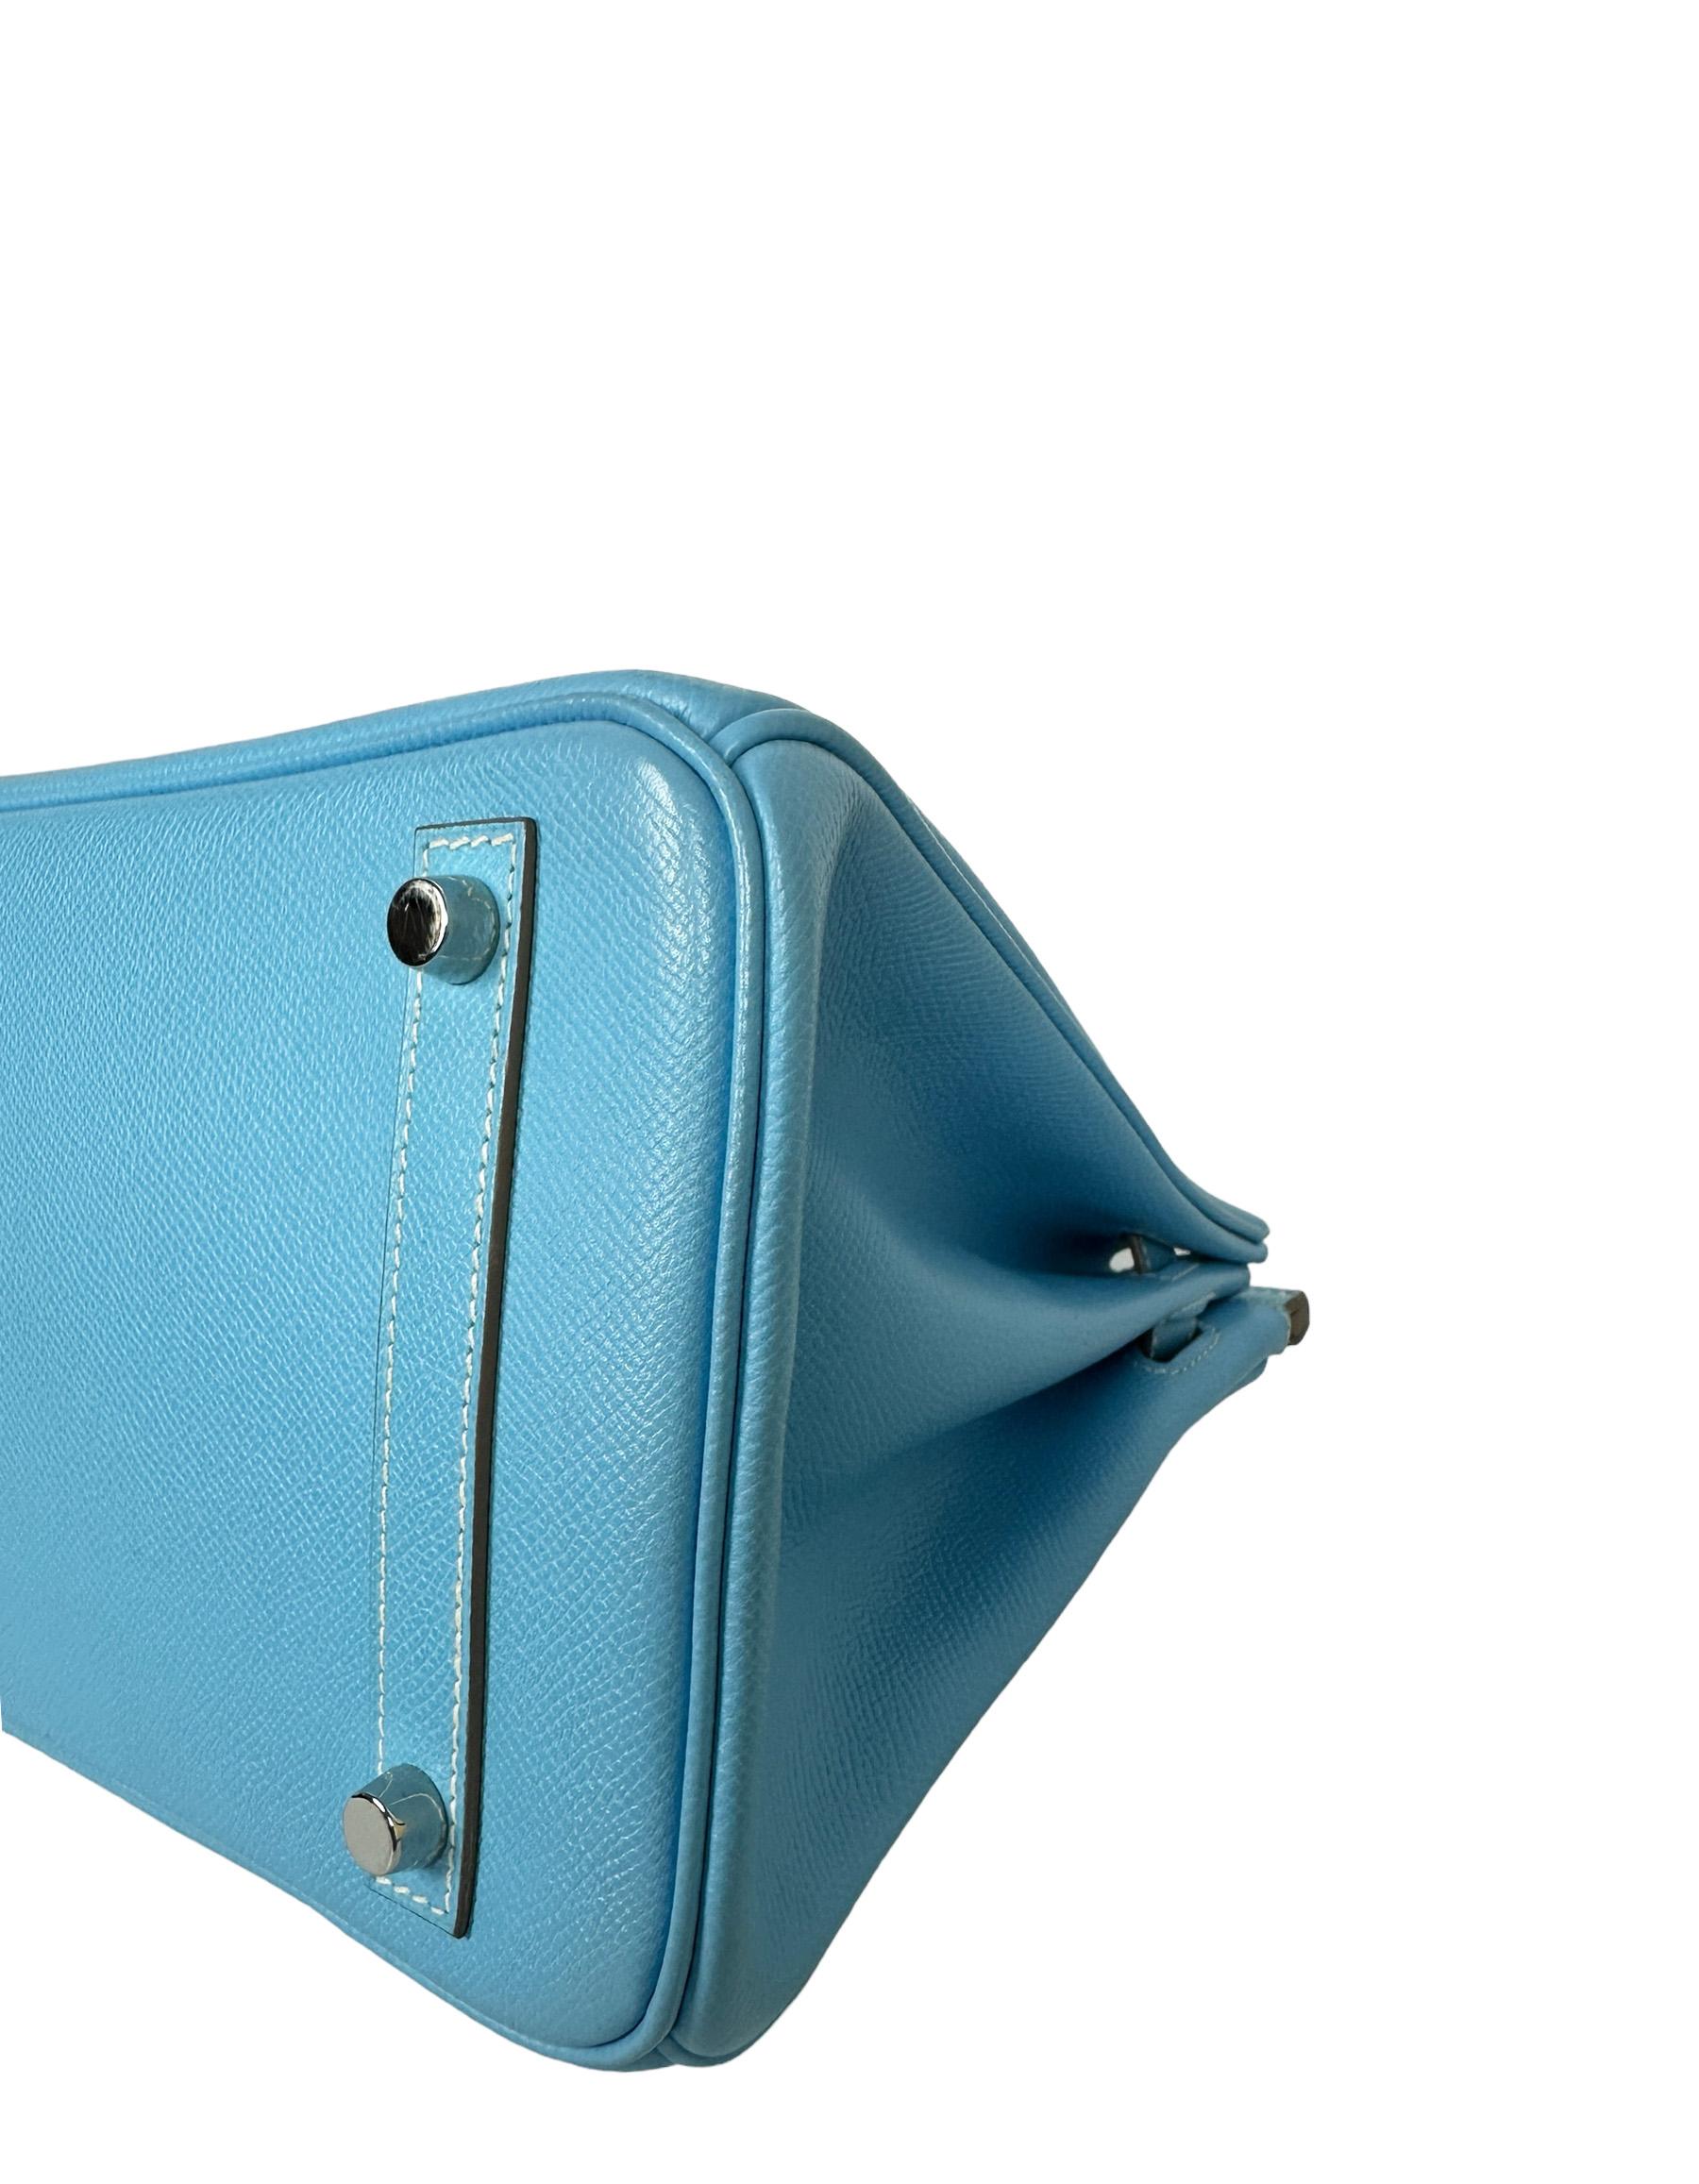 Hermes Bleu Celeste/ Mykonos Epsom Leather Candy Birkin Bag 30cm PHW 2